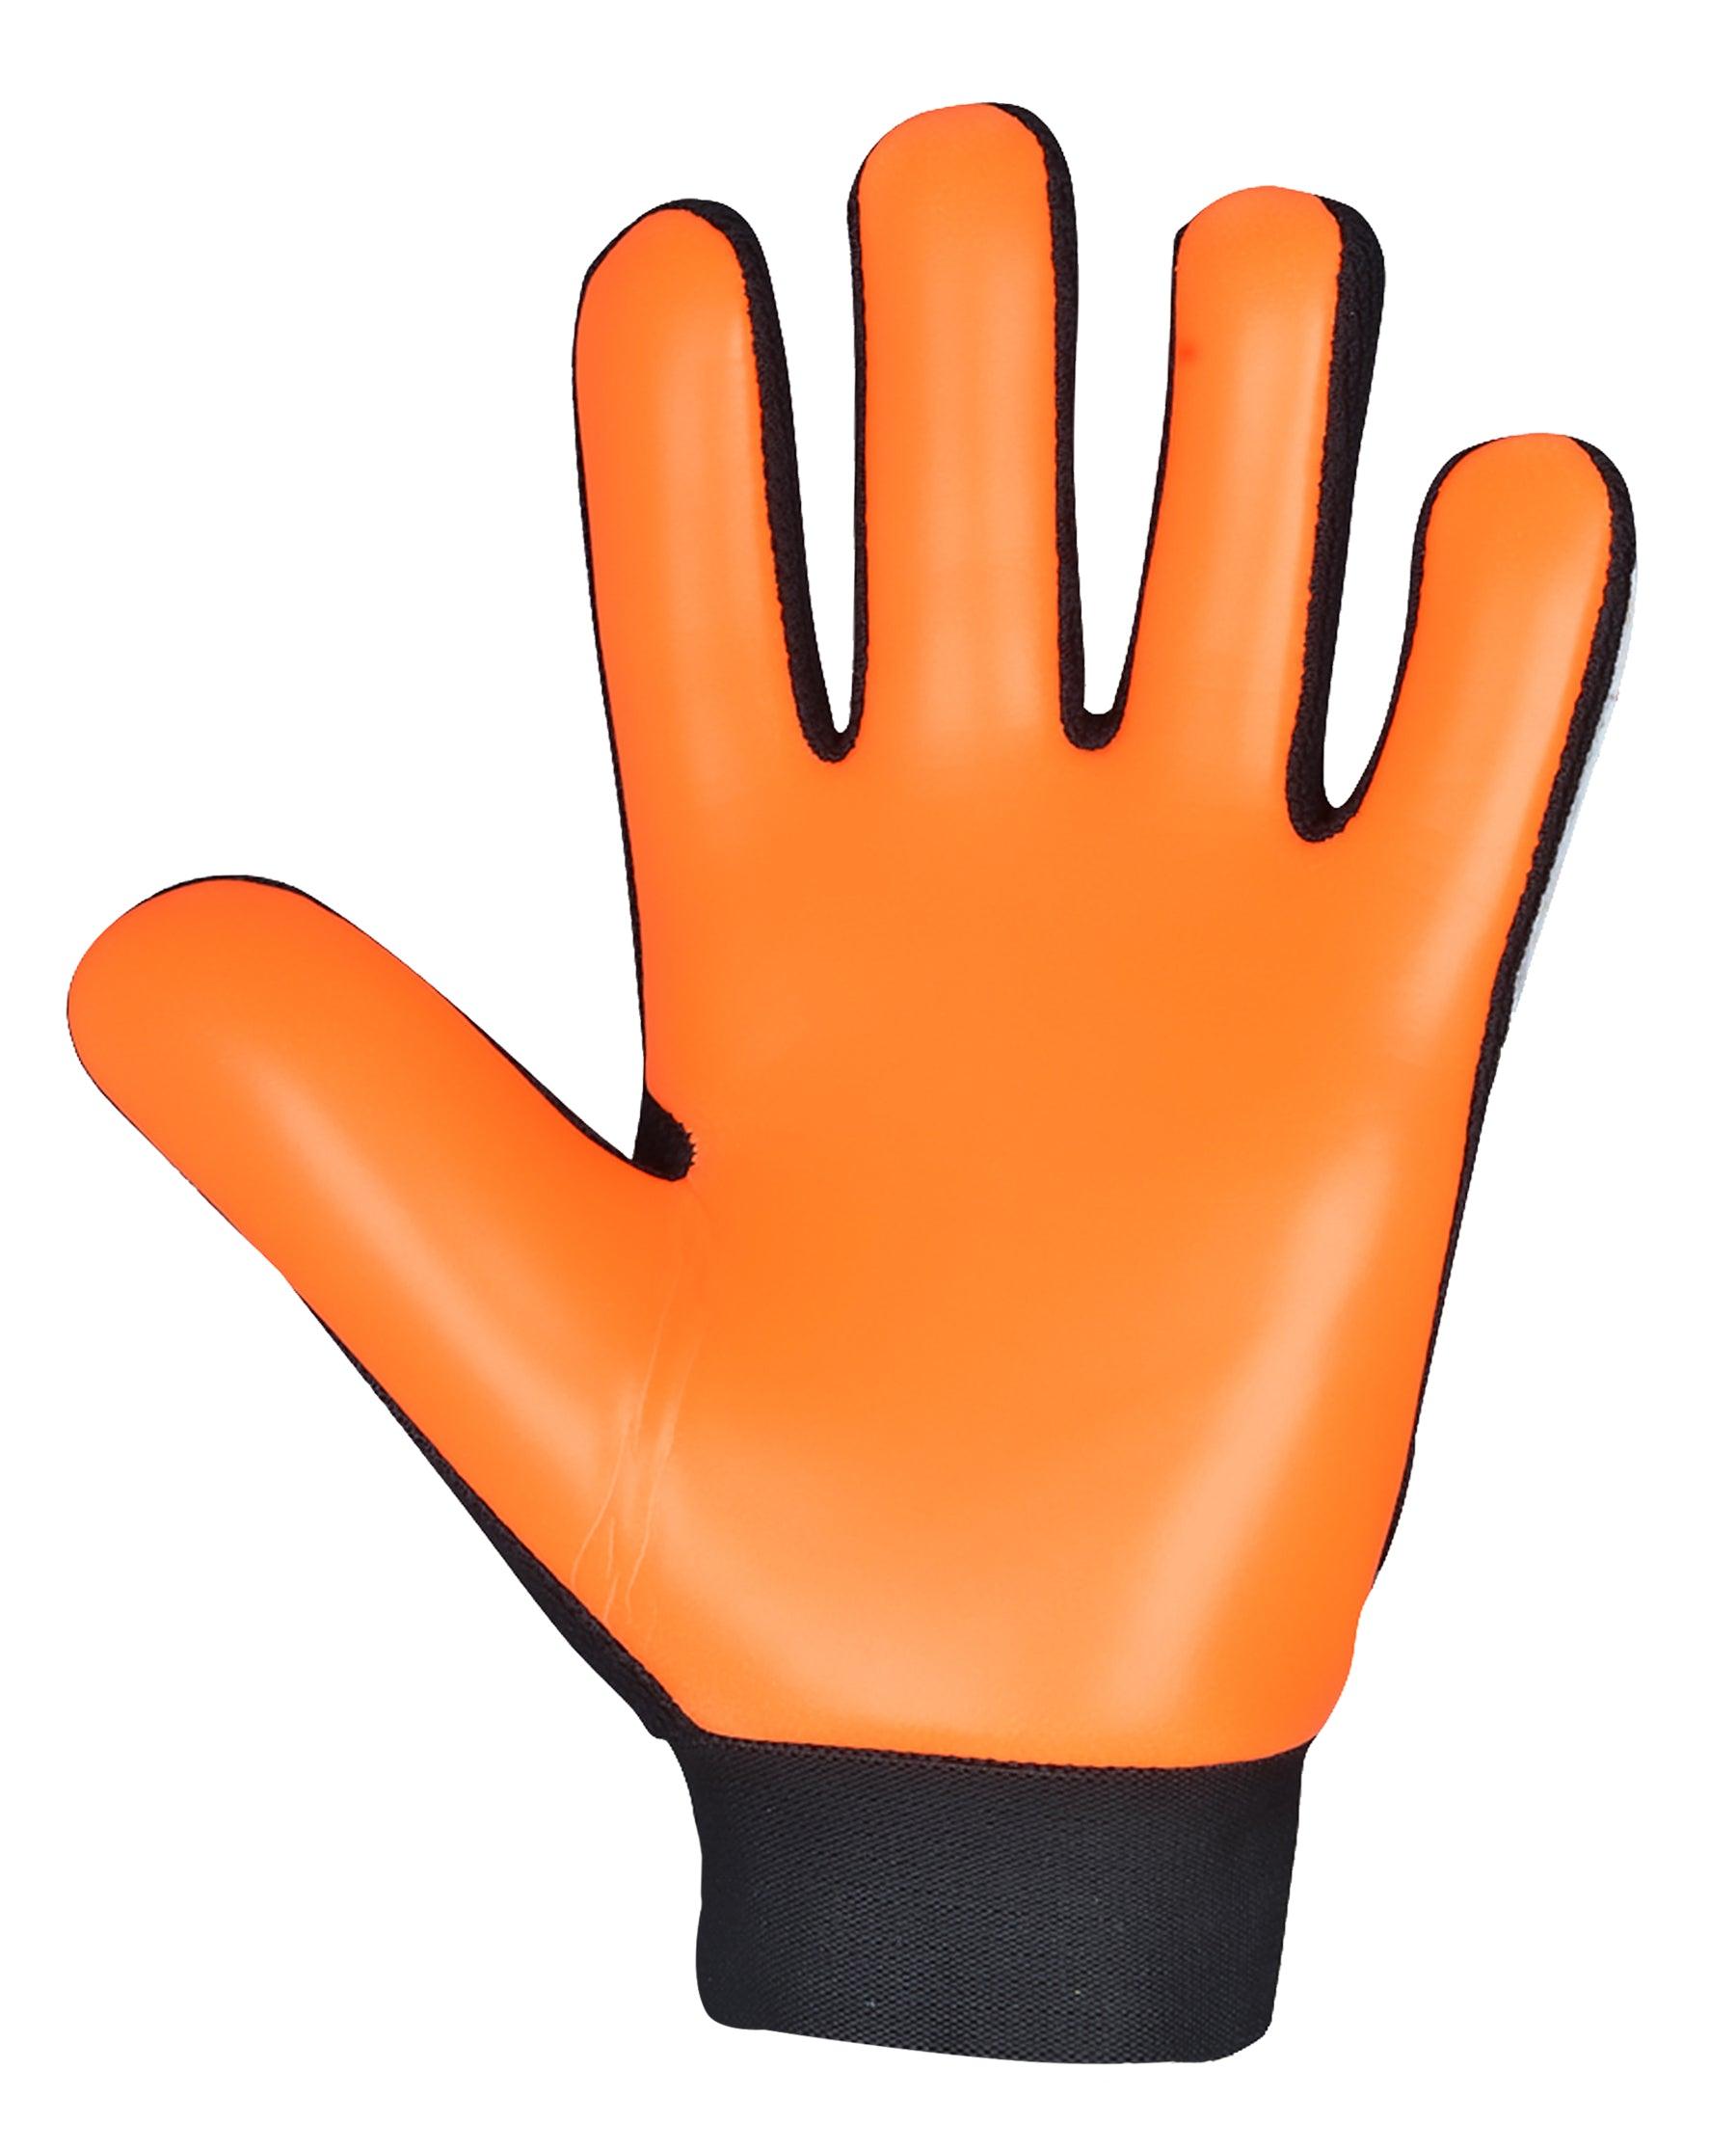 CLAW ORANGE goalkeeper glove